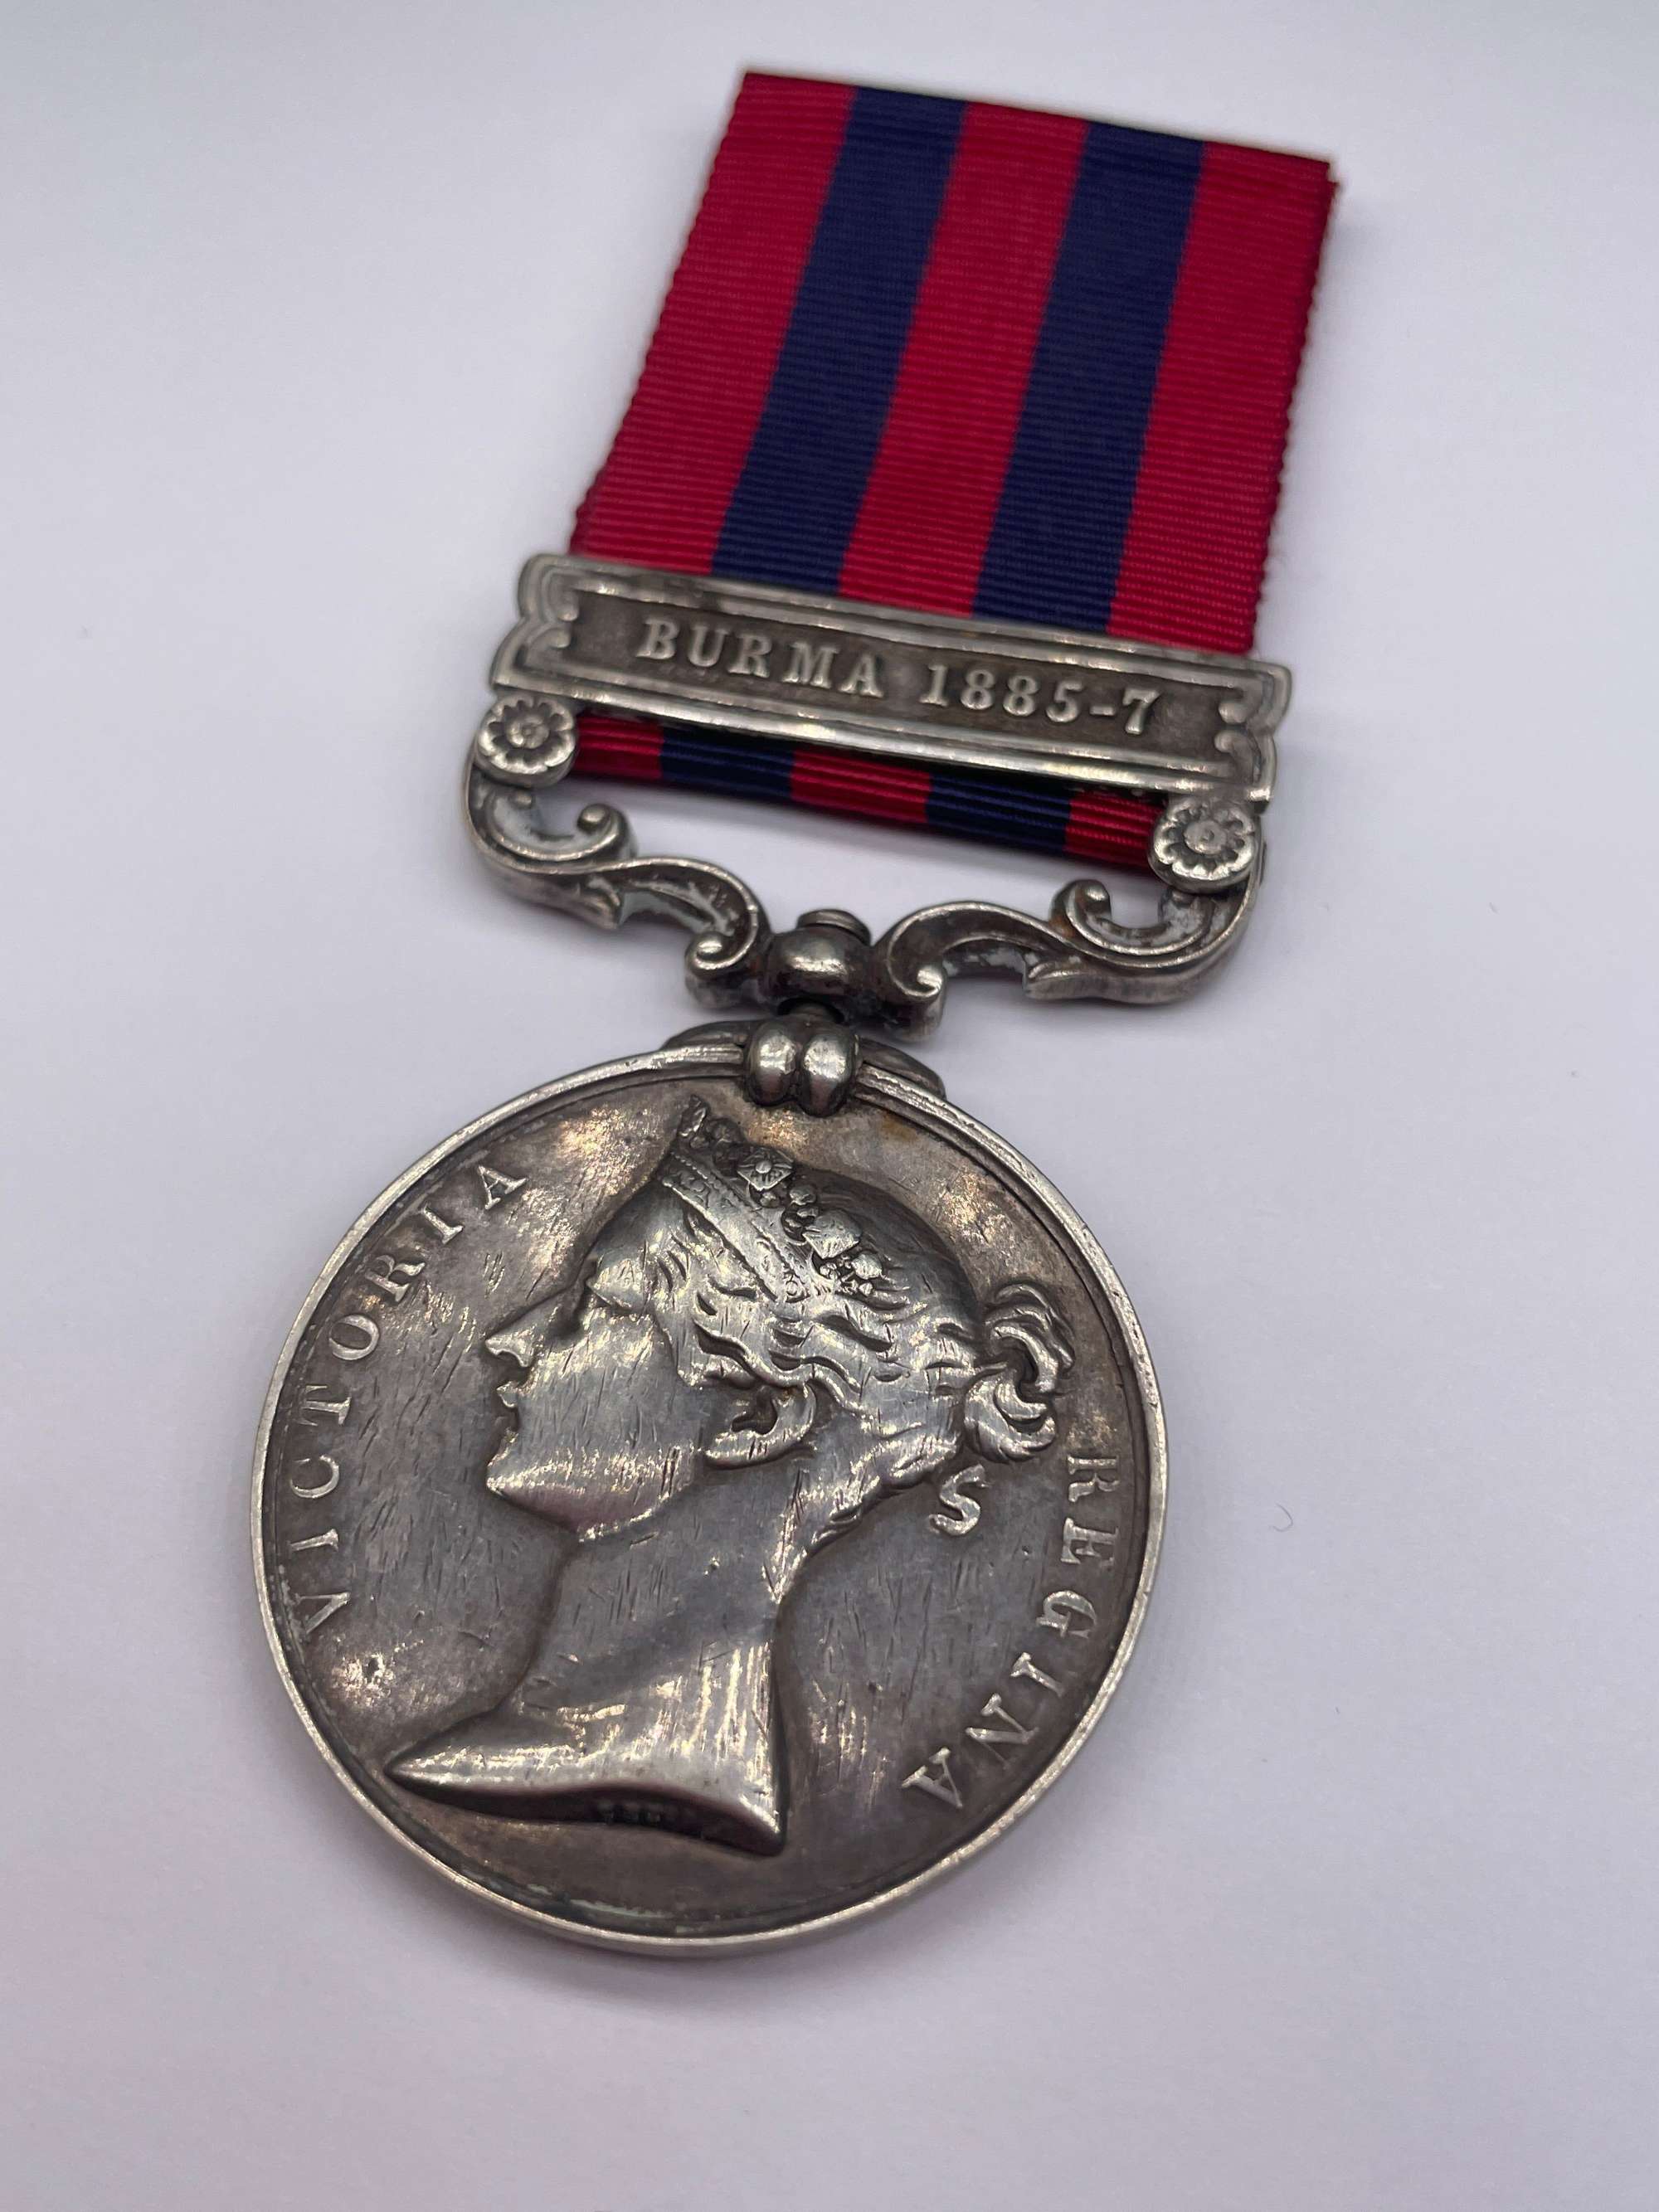 Original 1854 India General Service Medal, Burma 1885-7, Erased